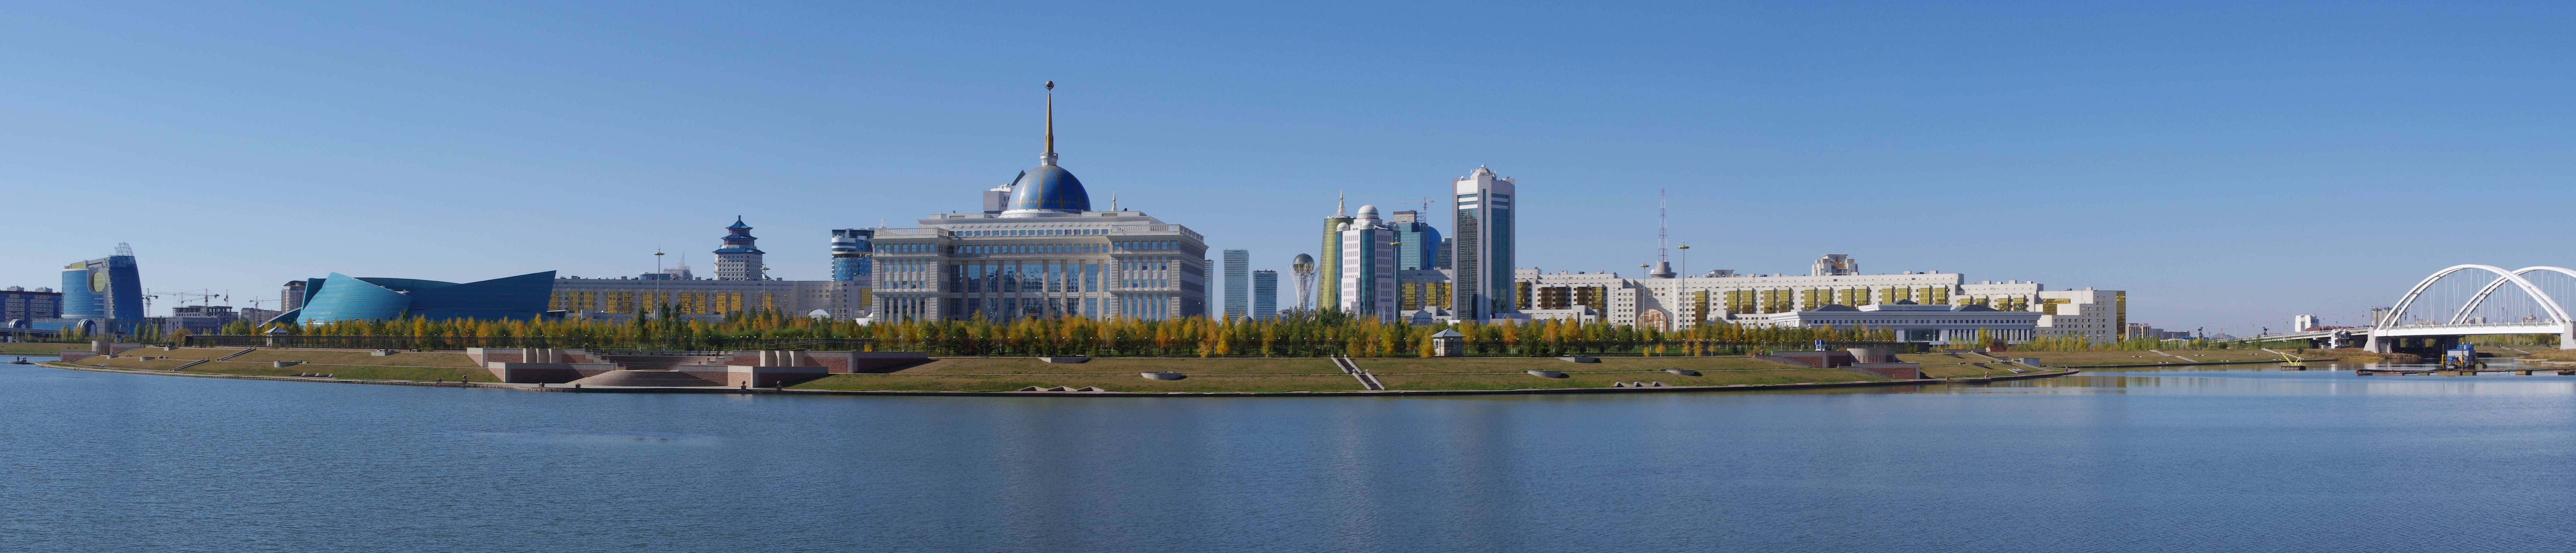 Central_Downtown_Astana_pamorama.jpg